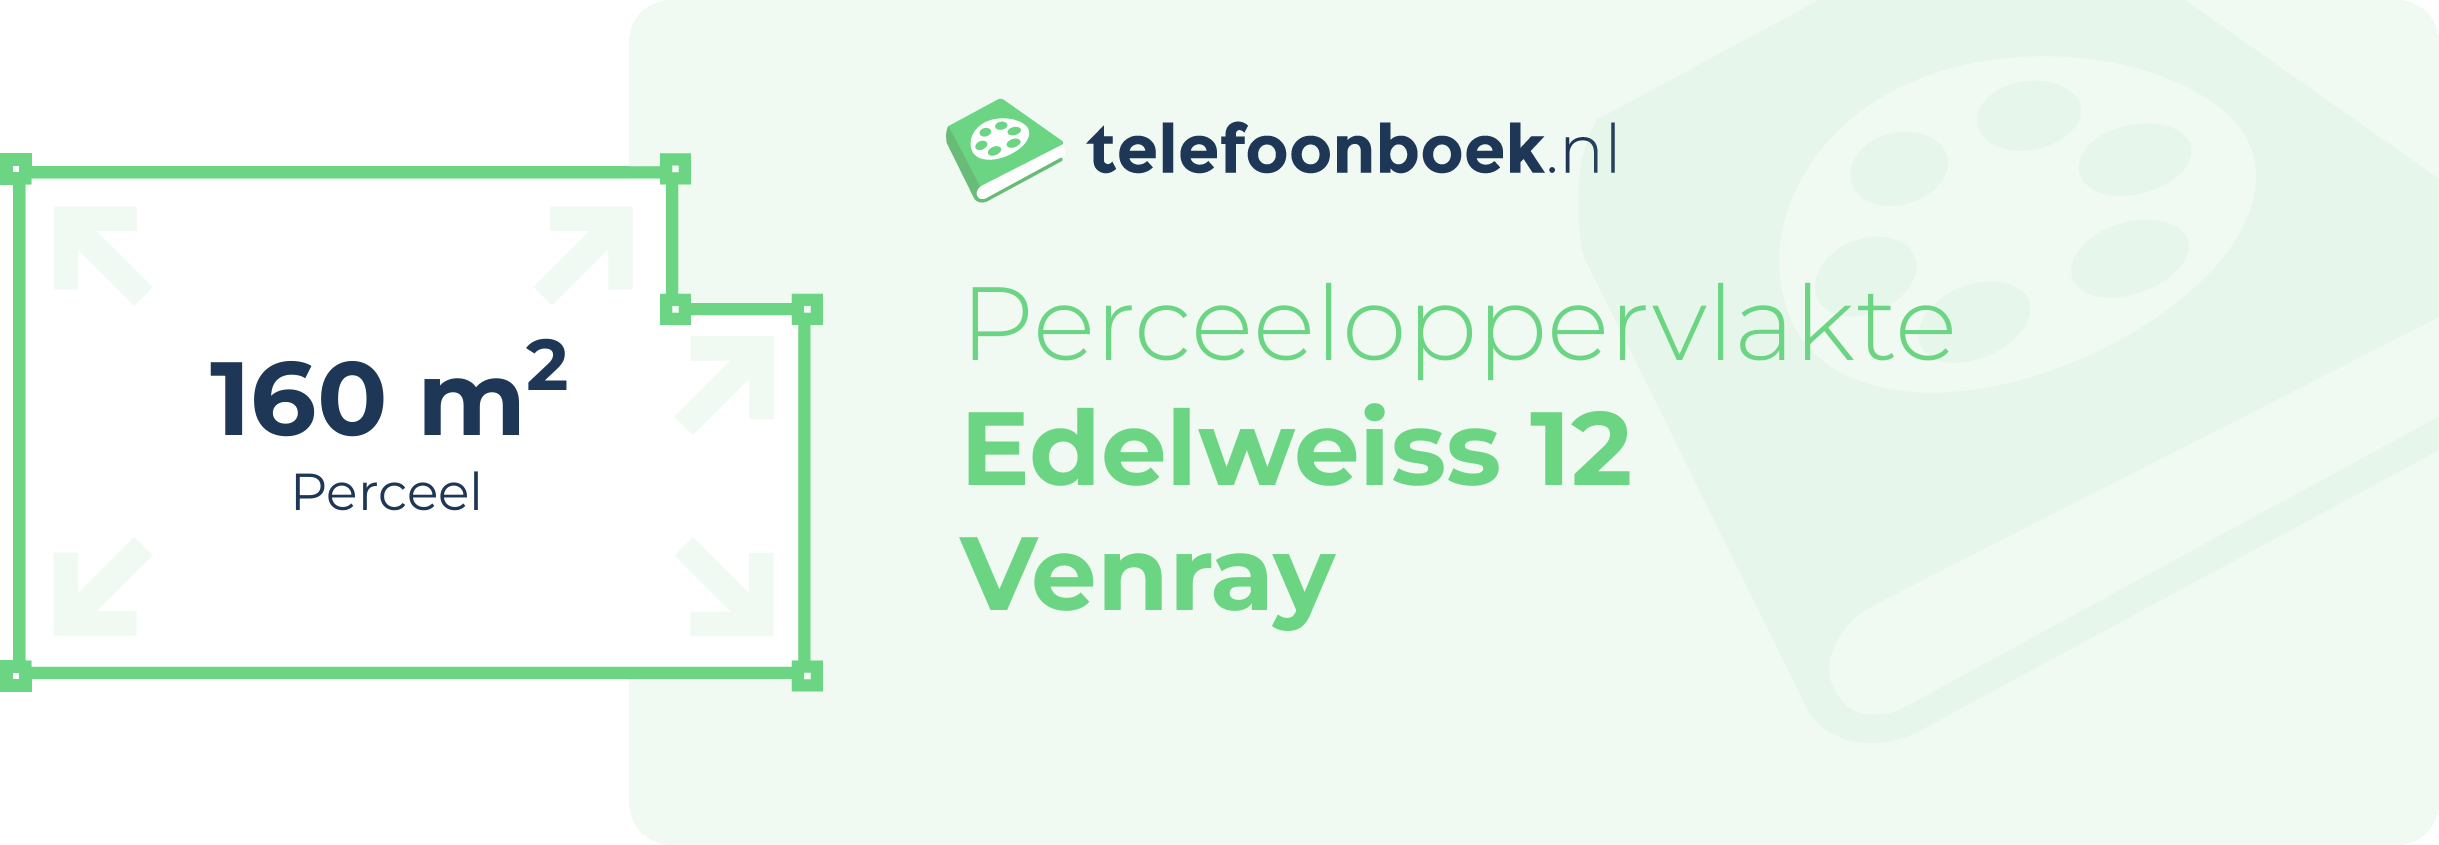 Perceeloppervlakte Edelweiss 12 Venray